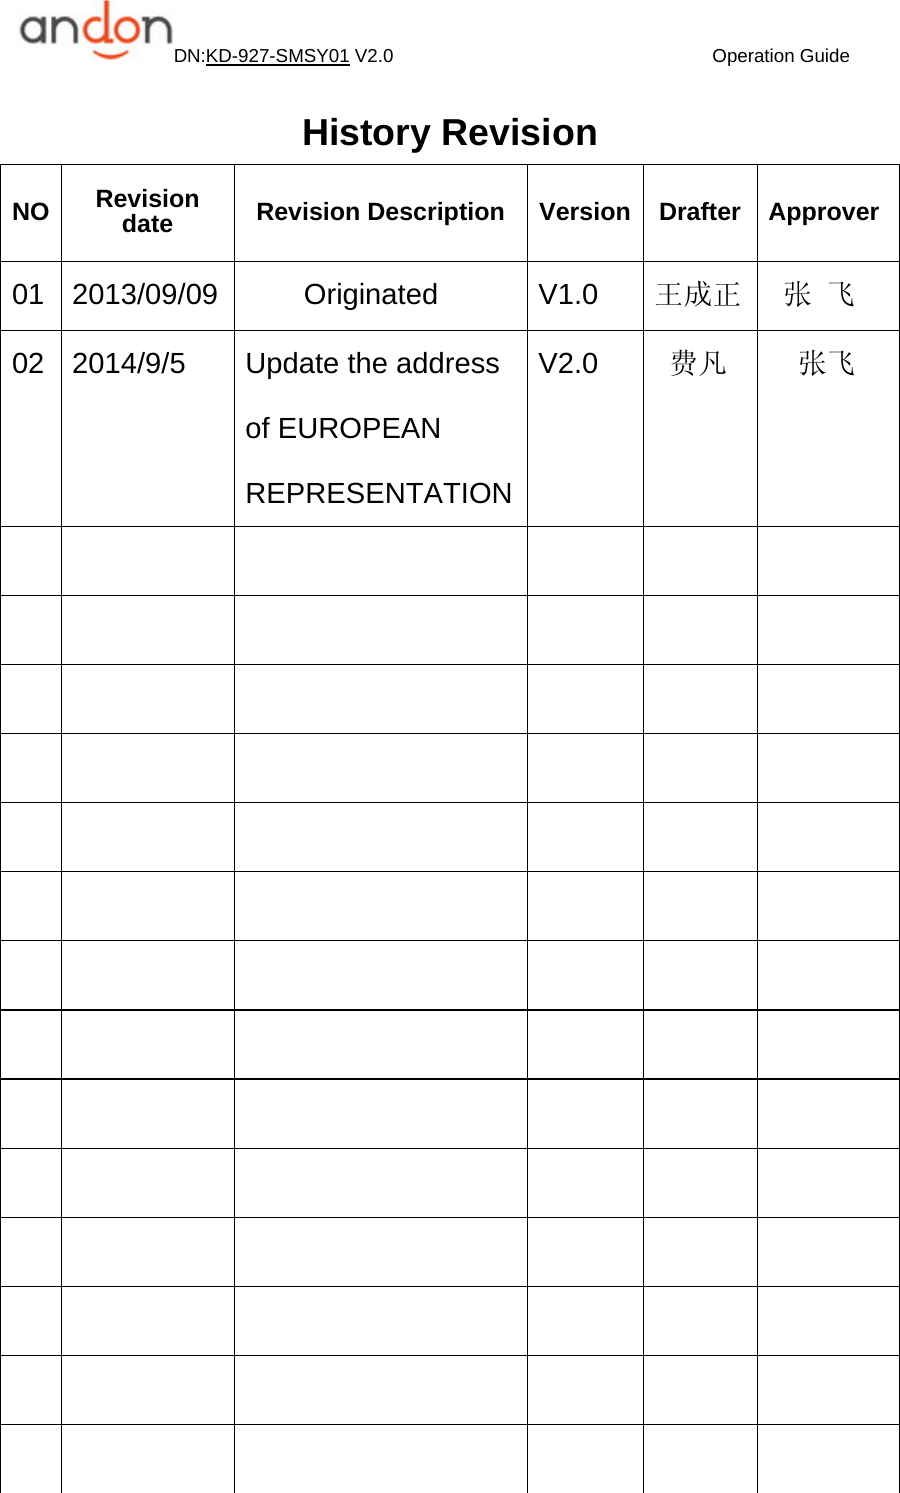 DN:KD-927-SMSY01 V2.0                                  Operation Guide  History Revision NO  Revision date  Revision Description  Version Drafter  Approver 01  2013/09/09      Originated  V1.0  王成正  张 飞 02  2014/9/5  Update the address of EUROPEAN REPRESENTATIONV2.0  费凡   张飞                                                                                                                                             